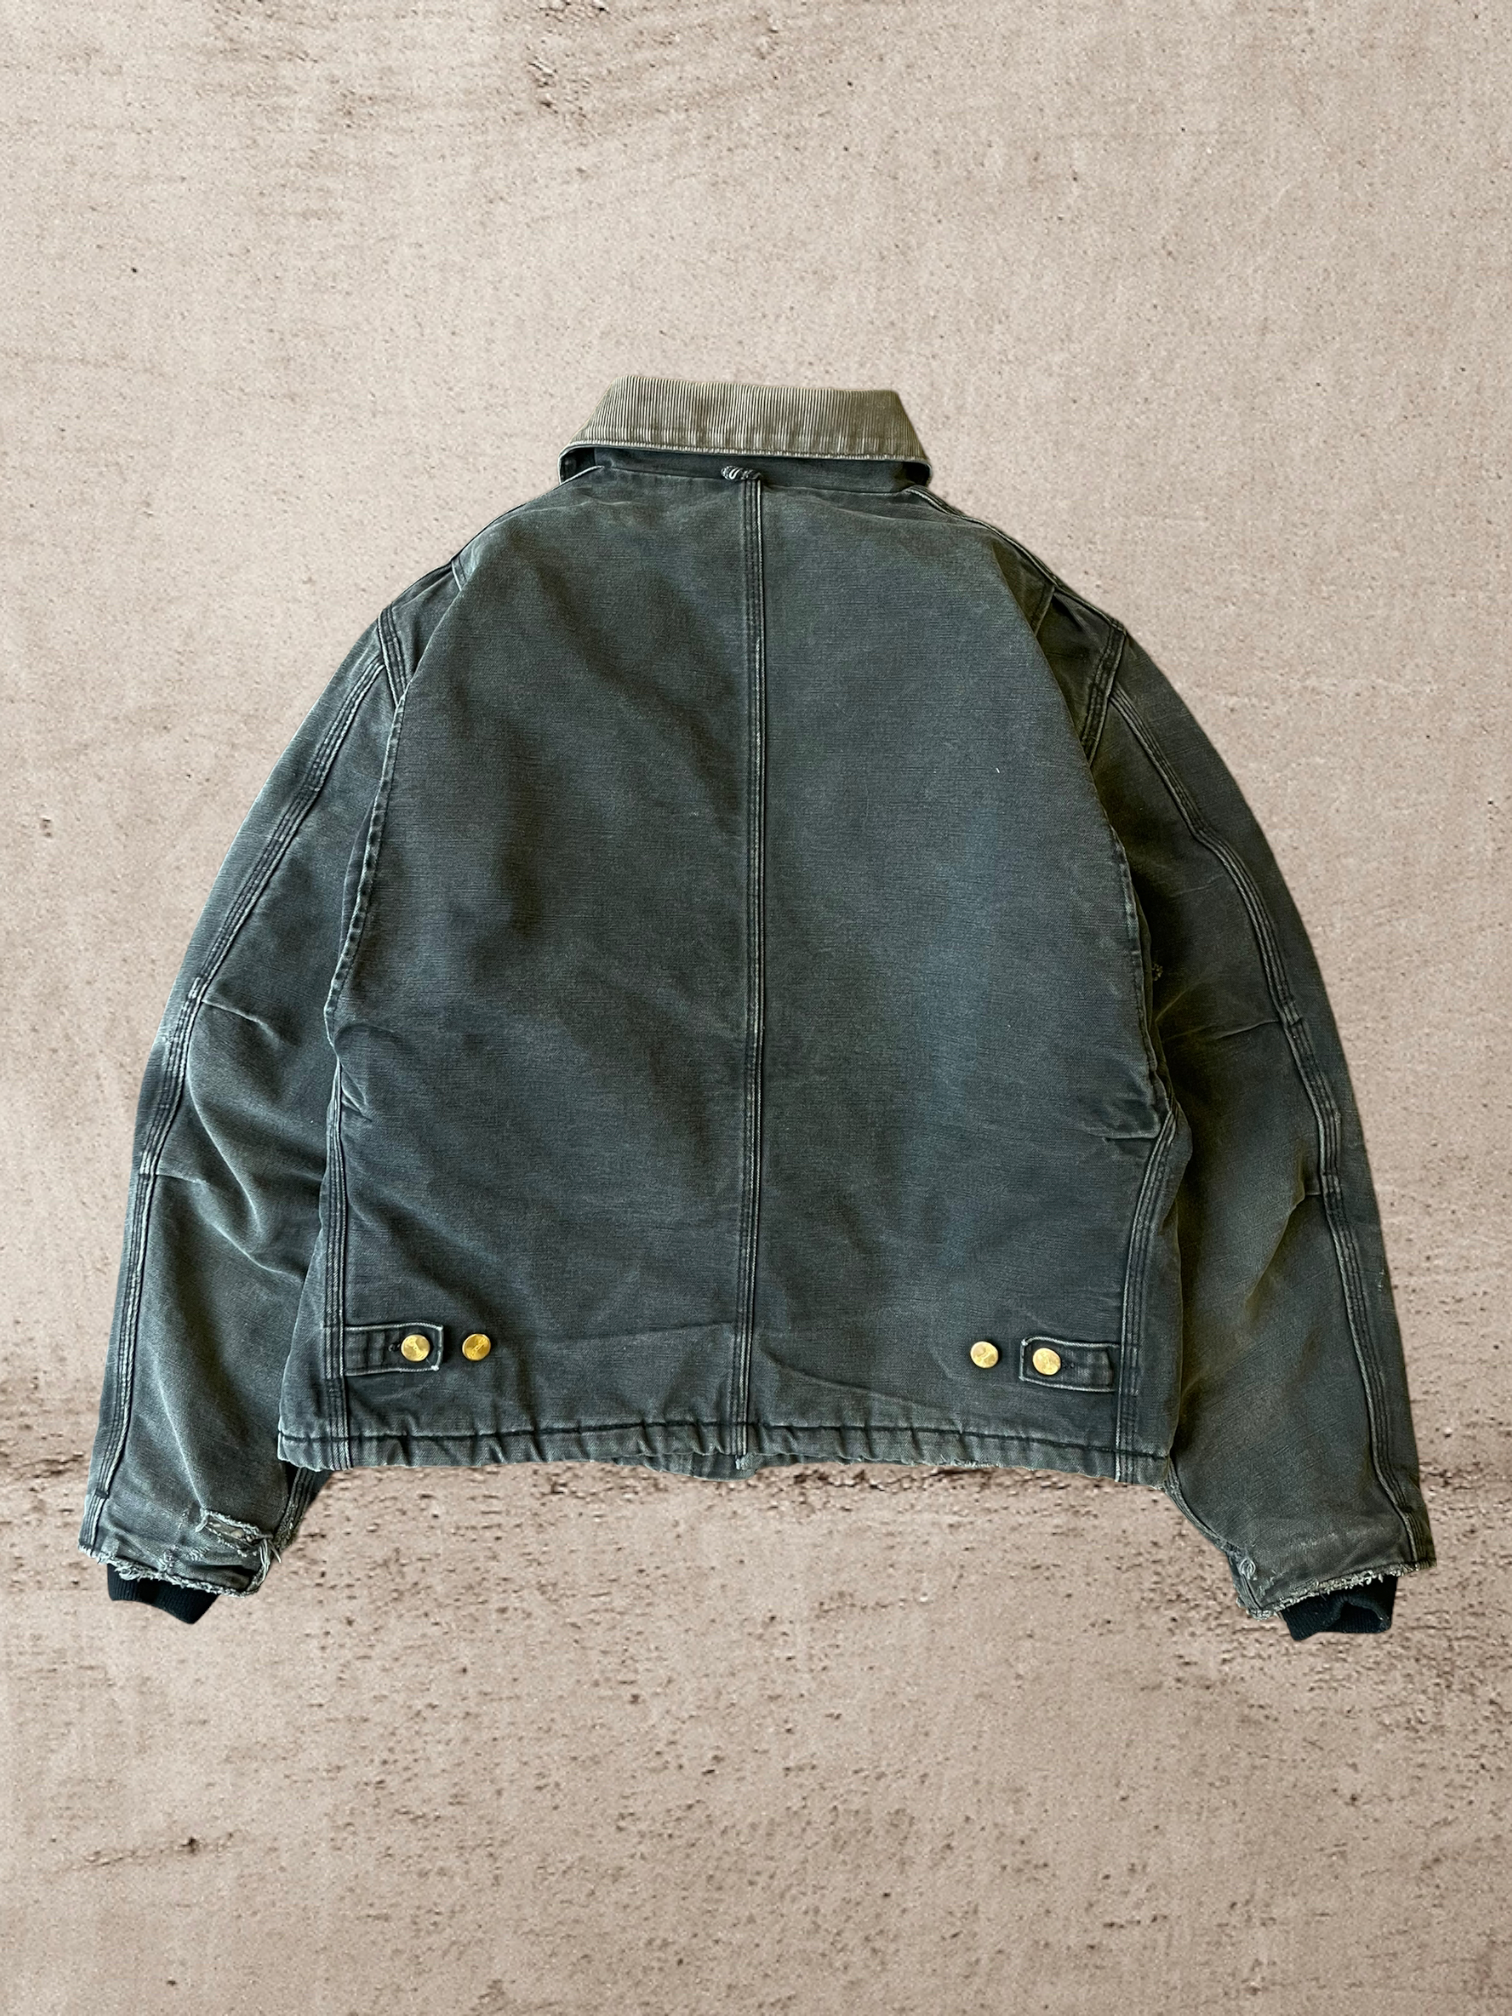 Vintage Carhartt J22 Quilted Lined Jacket - Medium